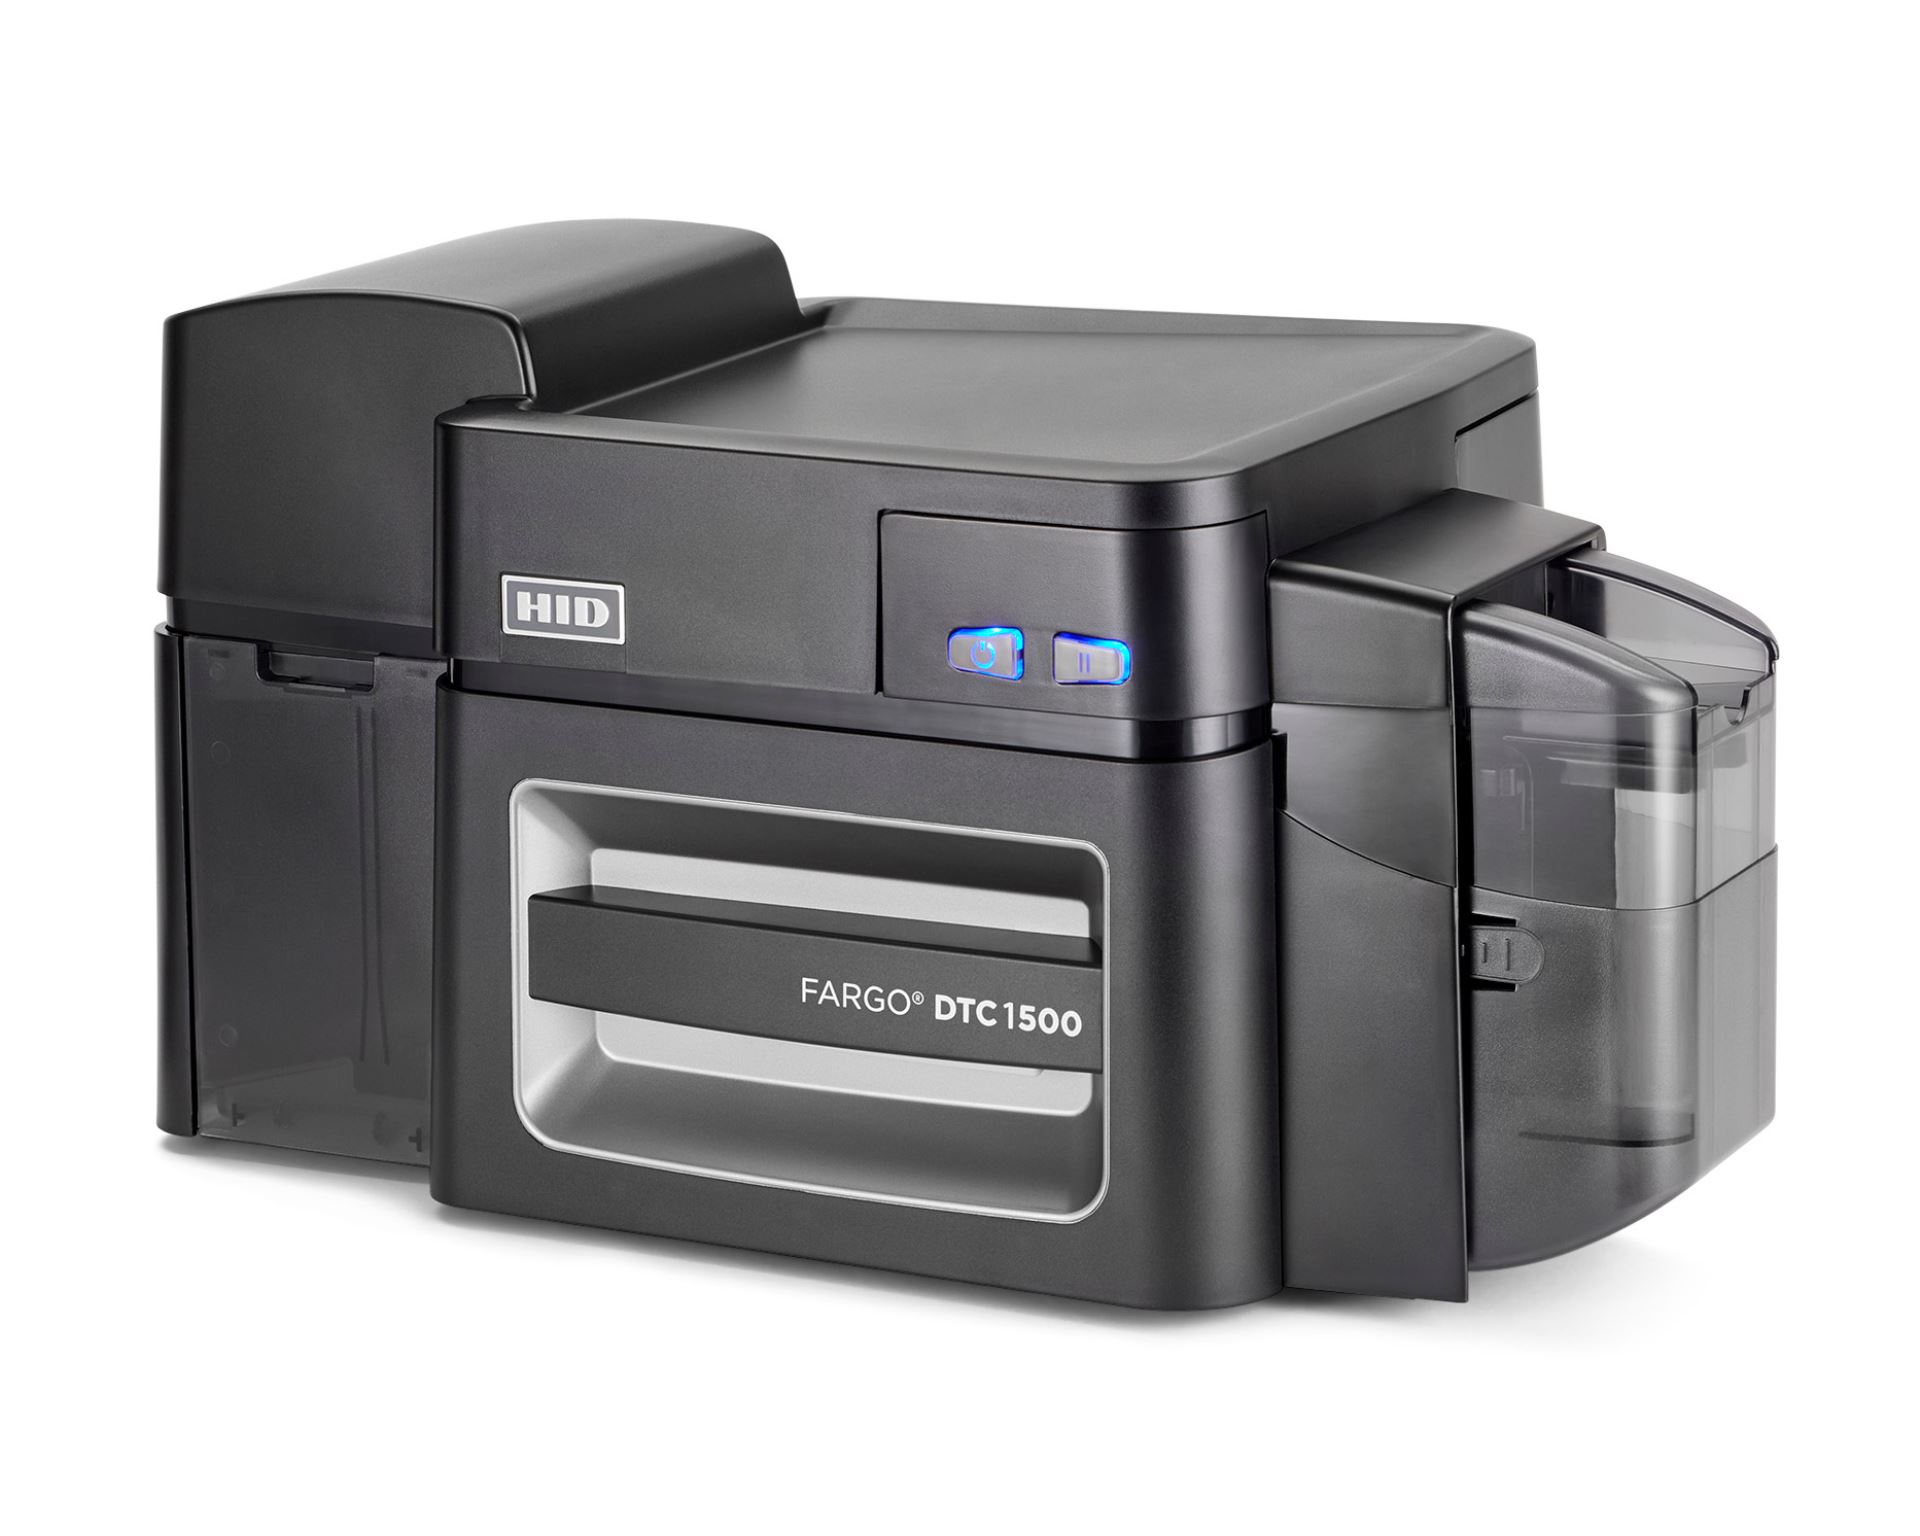 Fargo Dtc400 Printer Driver